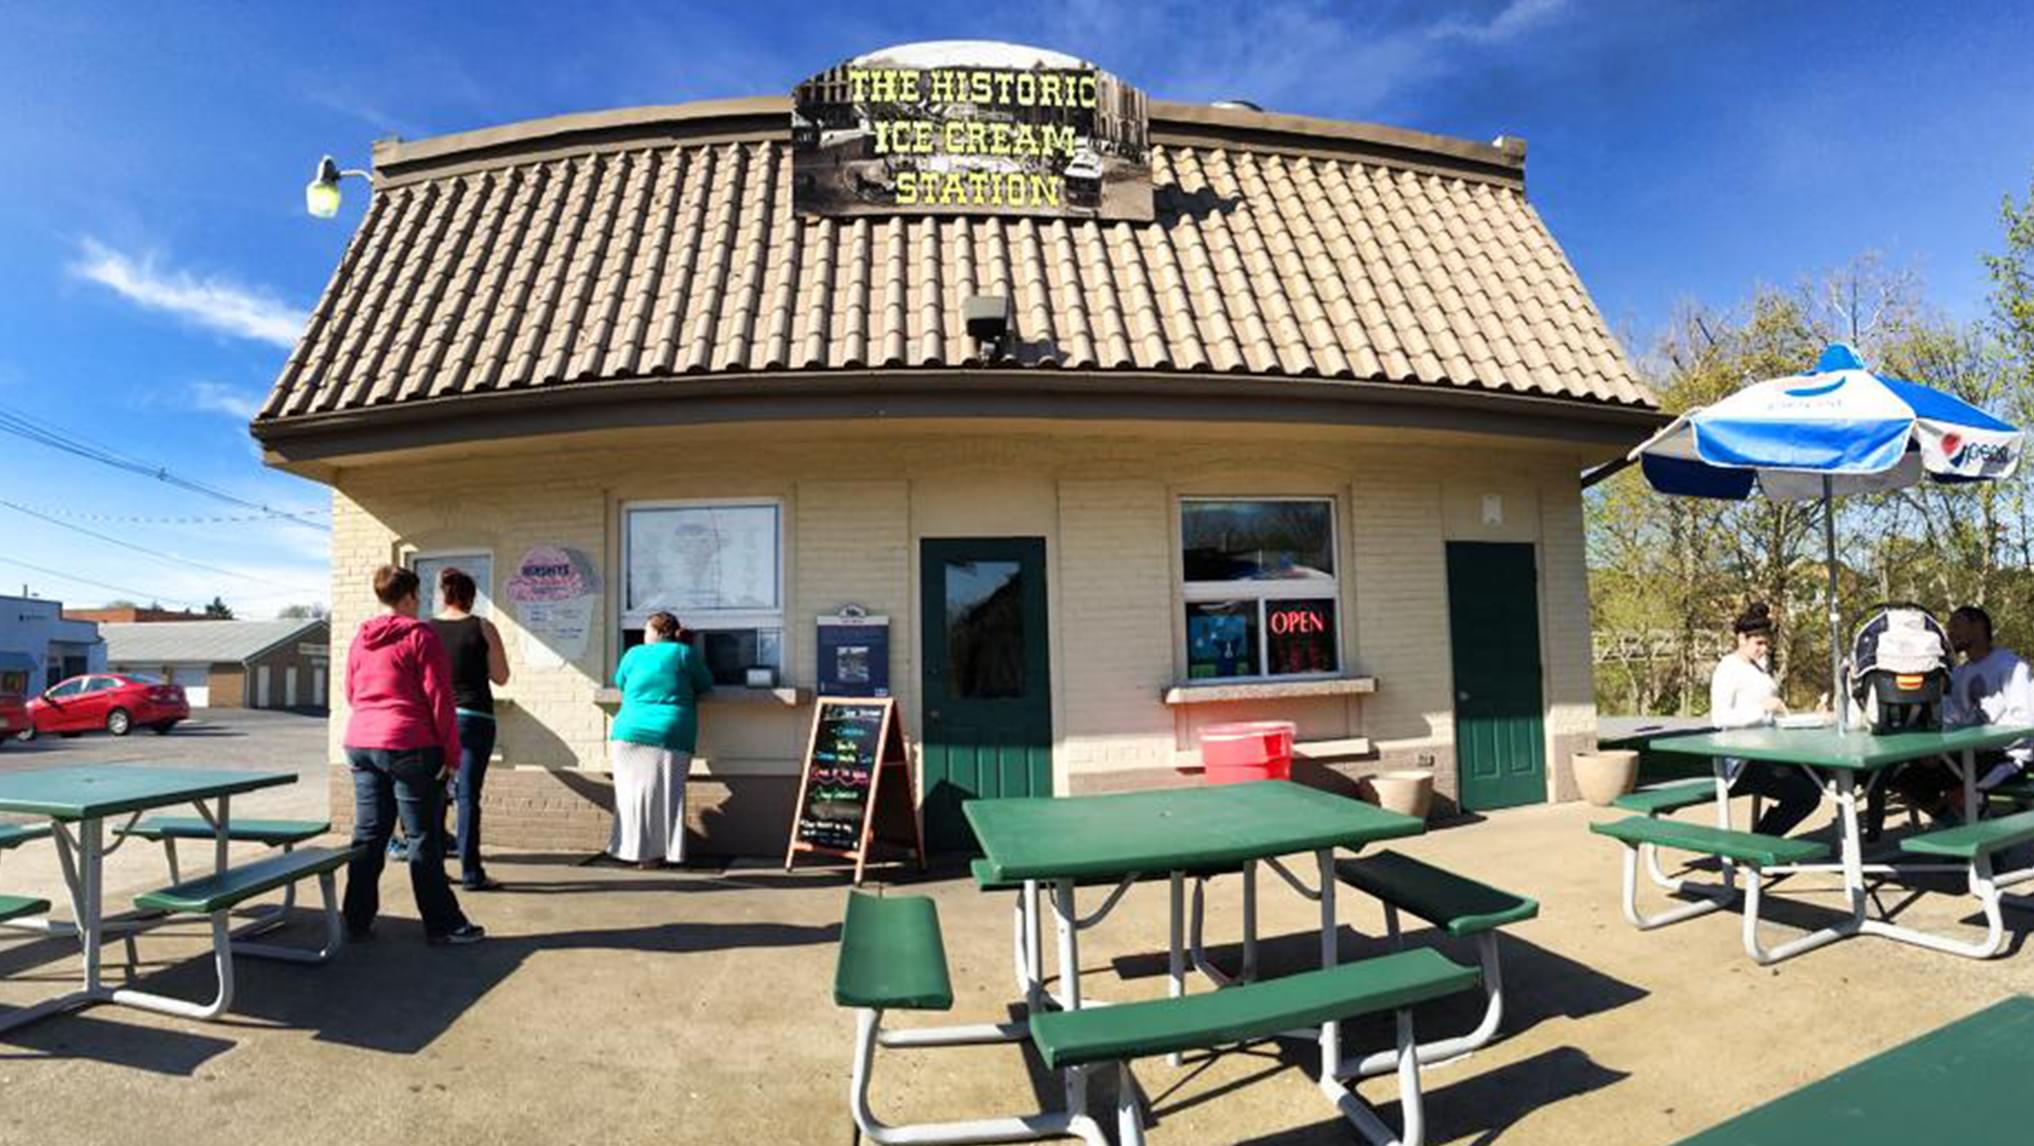 The Historic Ice Cream Station